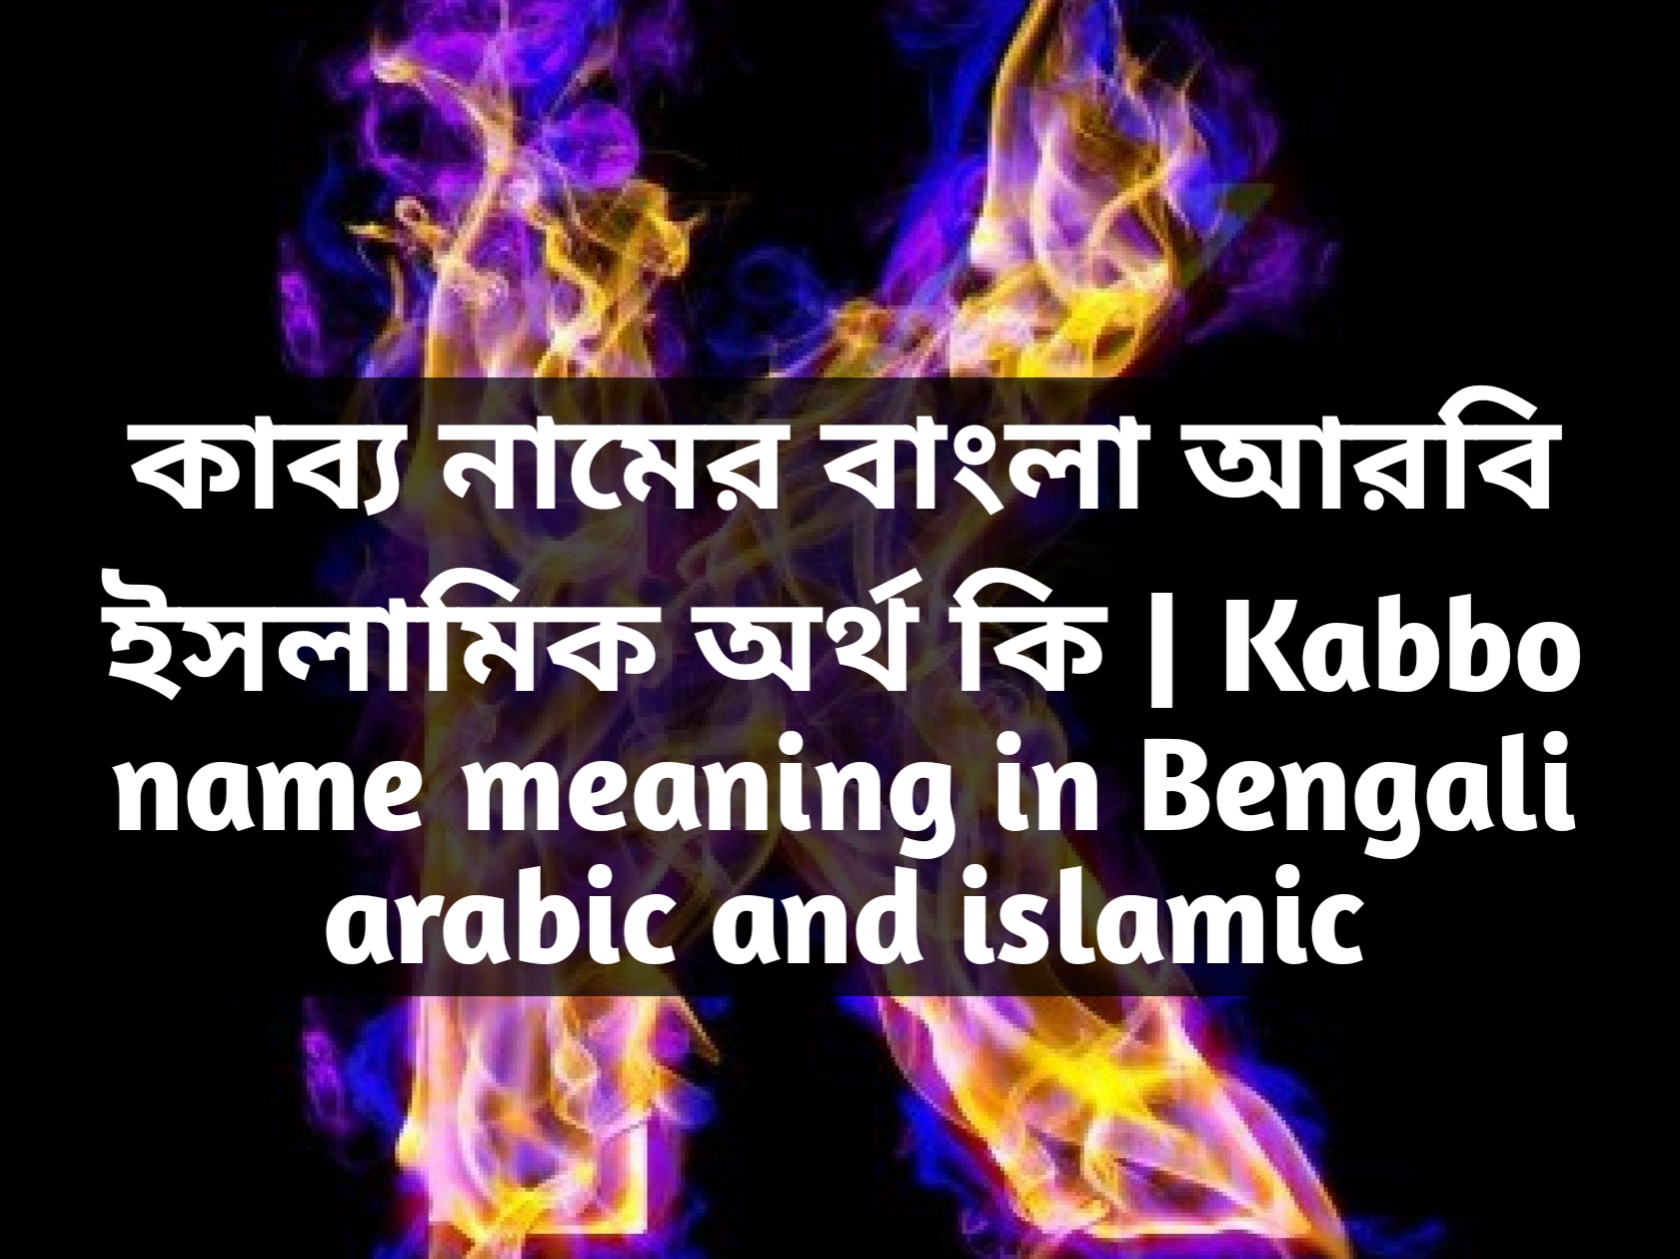 Kabbo name meaning in Bengali, কাব্য নামের অর্থ কি, কাব্য নামের বাংলা অর্থ কি, কাব্য নামের ইসলামিক অর্থ কি,